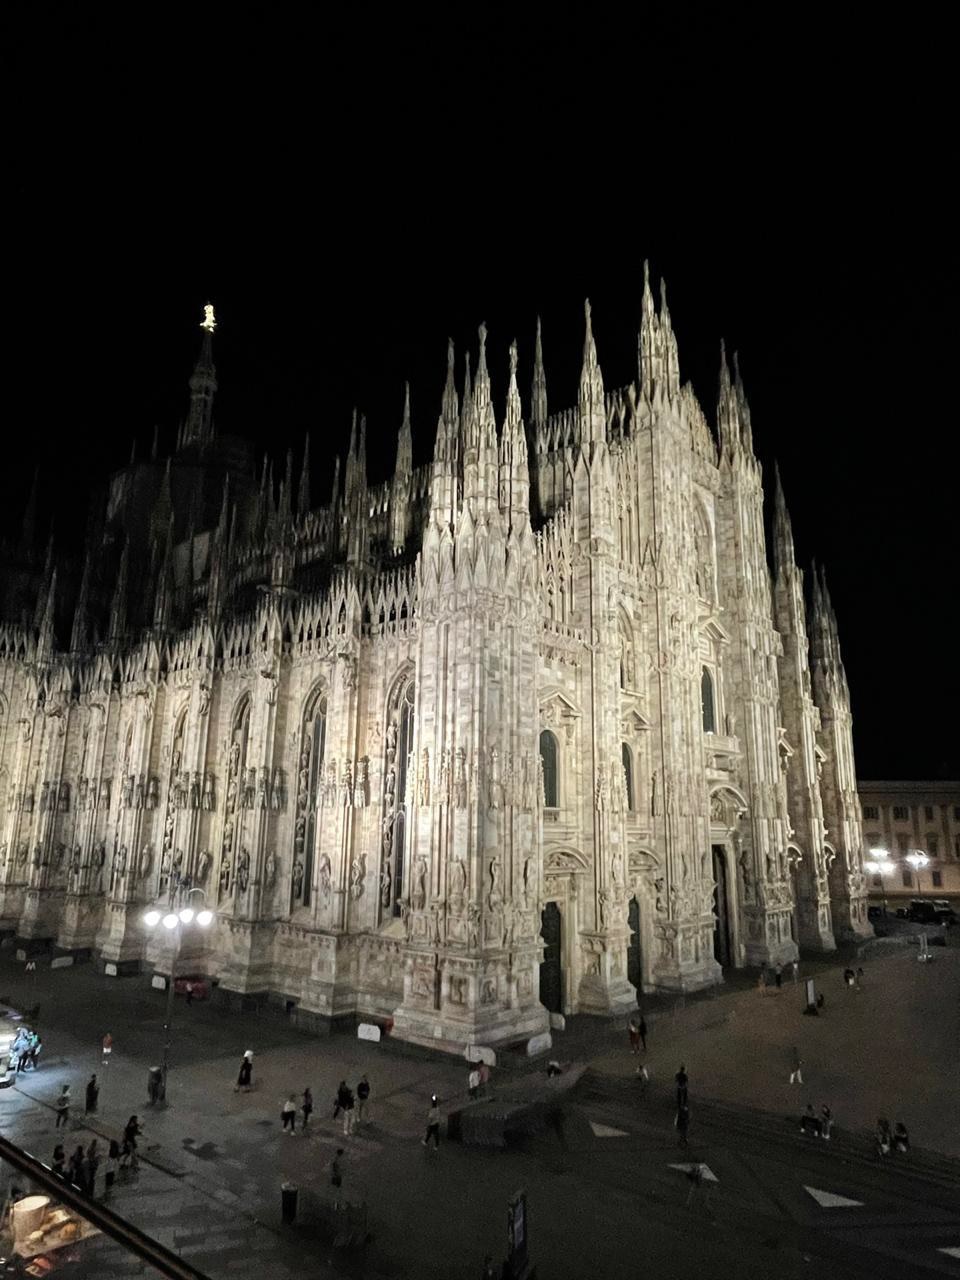 D&D SHopping mostr fotografia italia milao duomo catedral david bastos